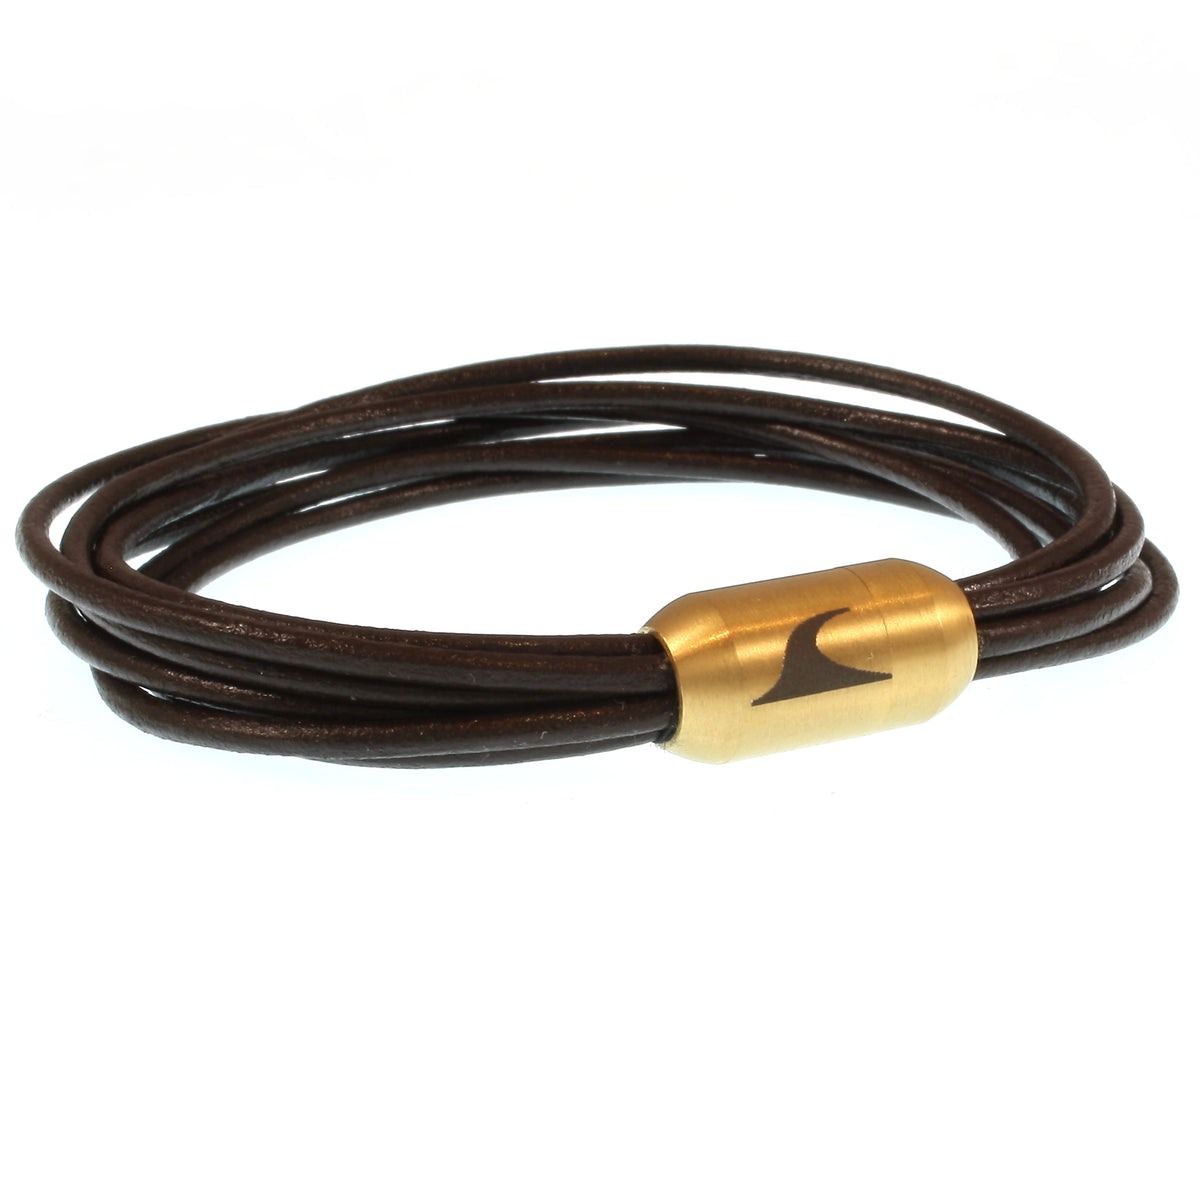 Damen-Leder-armband-fem-braun-gold-Edelstahlverschluss-vorn-wavepirate-shop-r